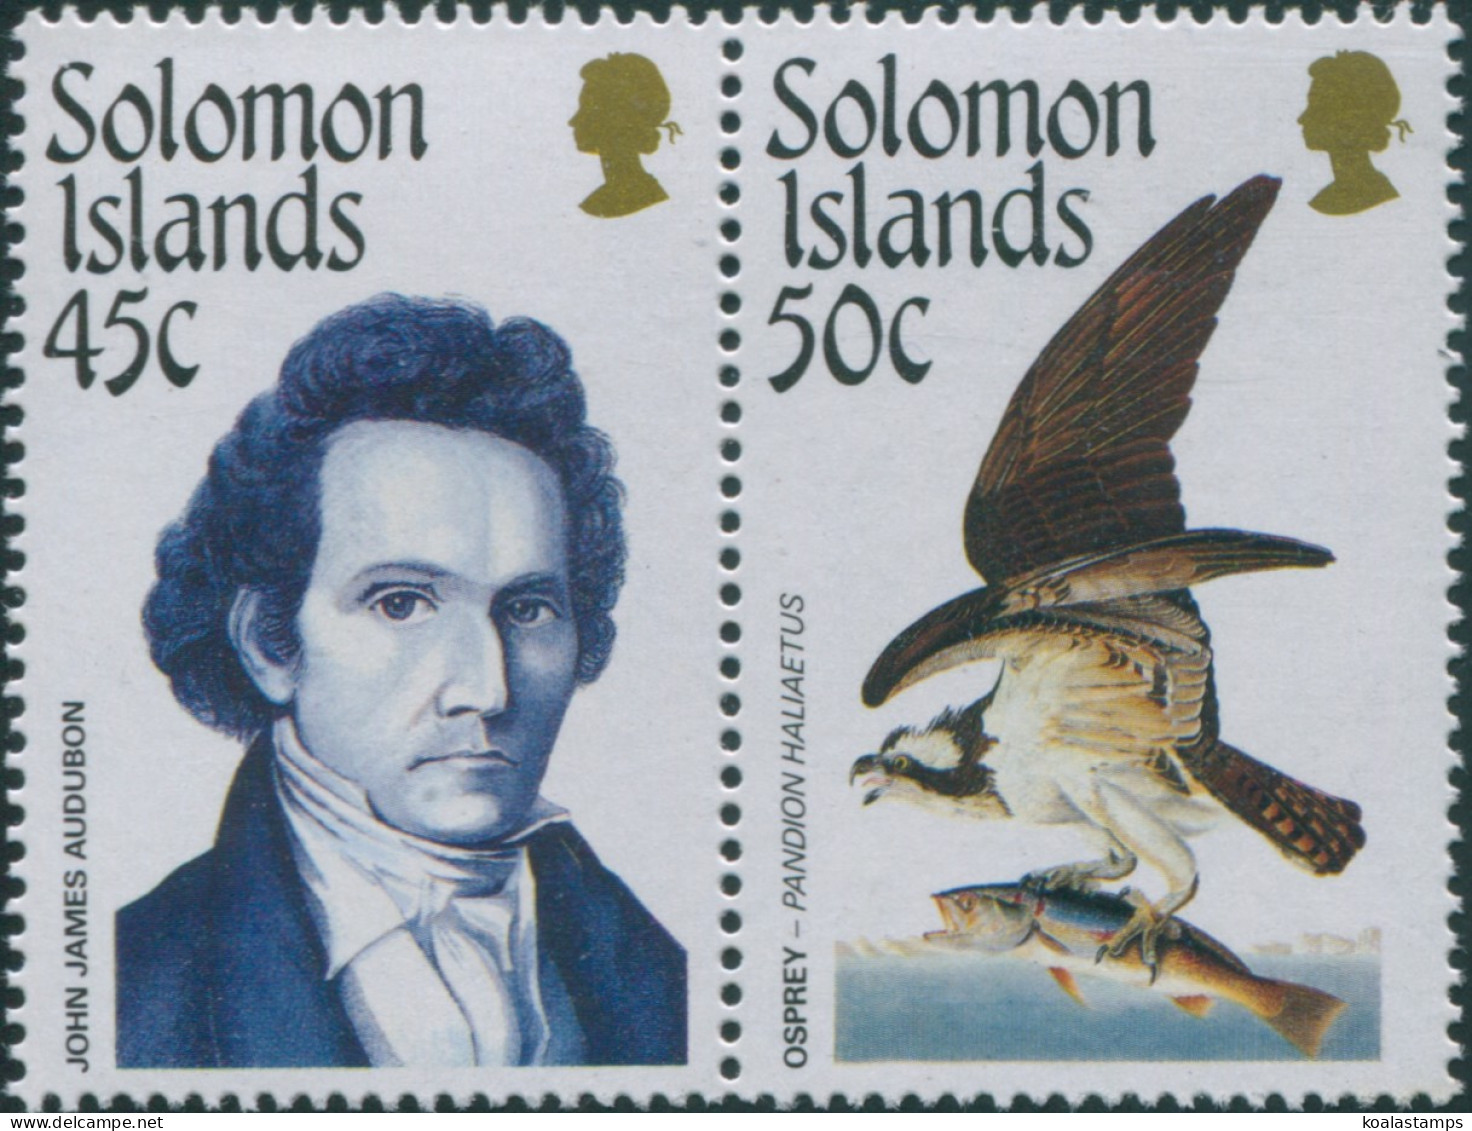 Solomon Islands 1986 SG556 Audubon Set Ex MS MNH - Islas Salomón (1978-...)